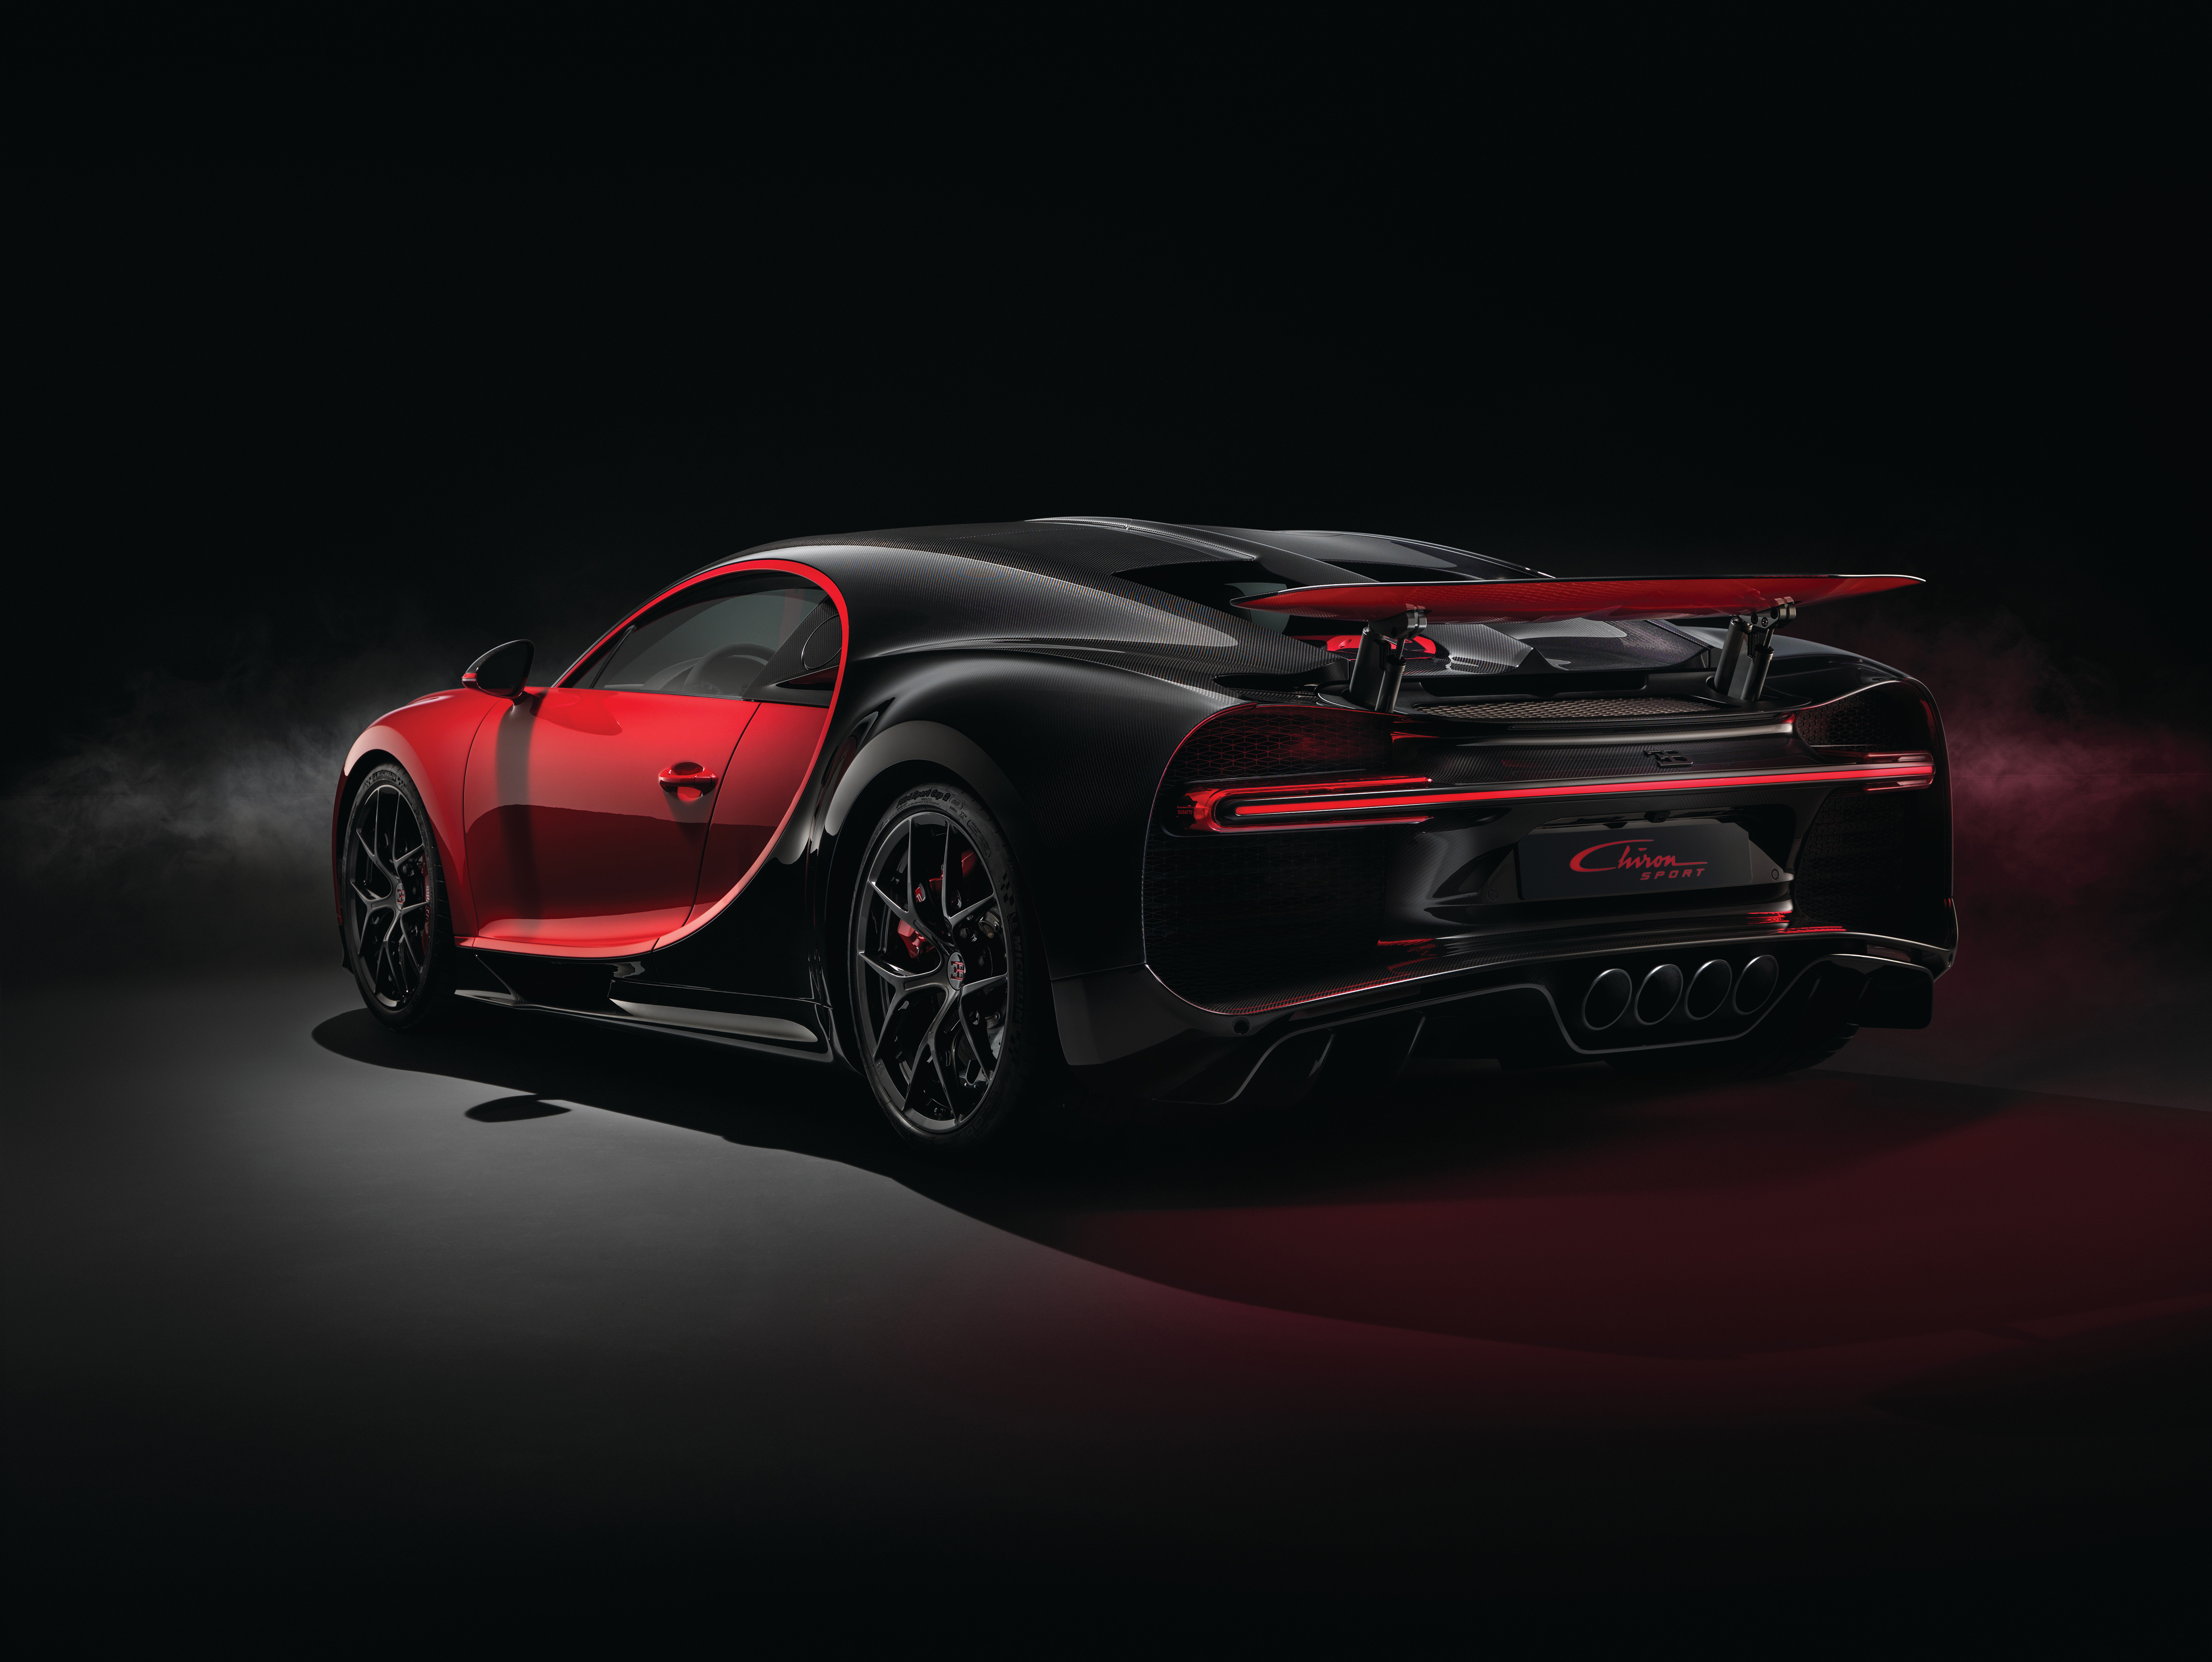 2018 Red Bugatti Chiron Sport Rear View, HD Cars, 4k ...